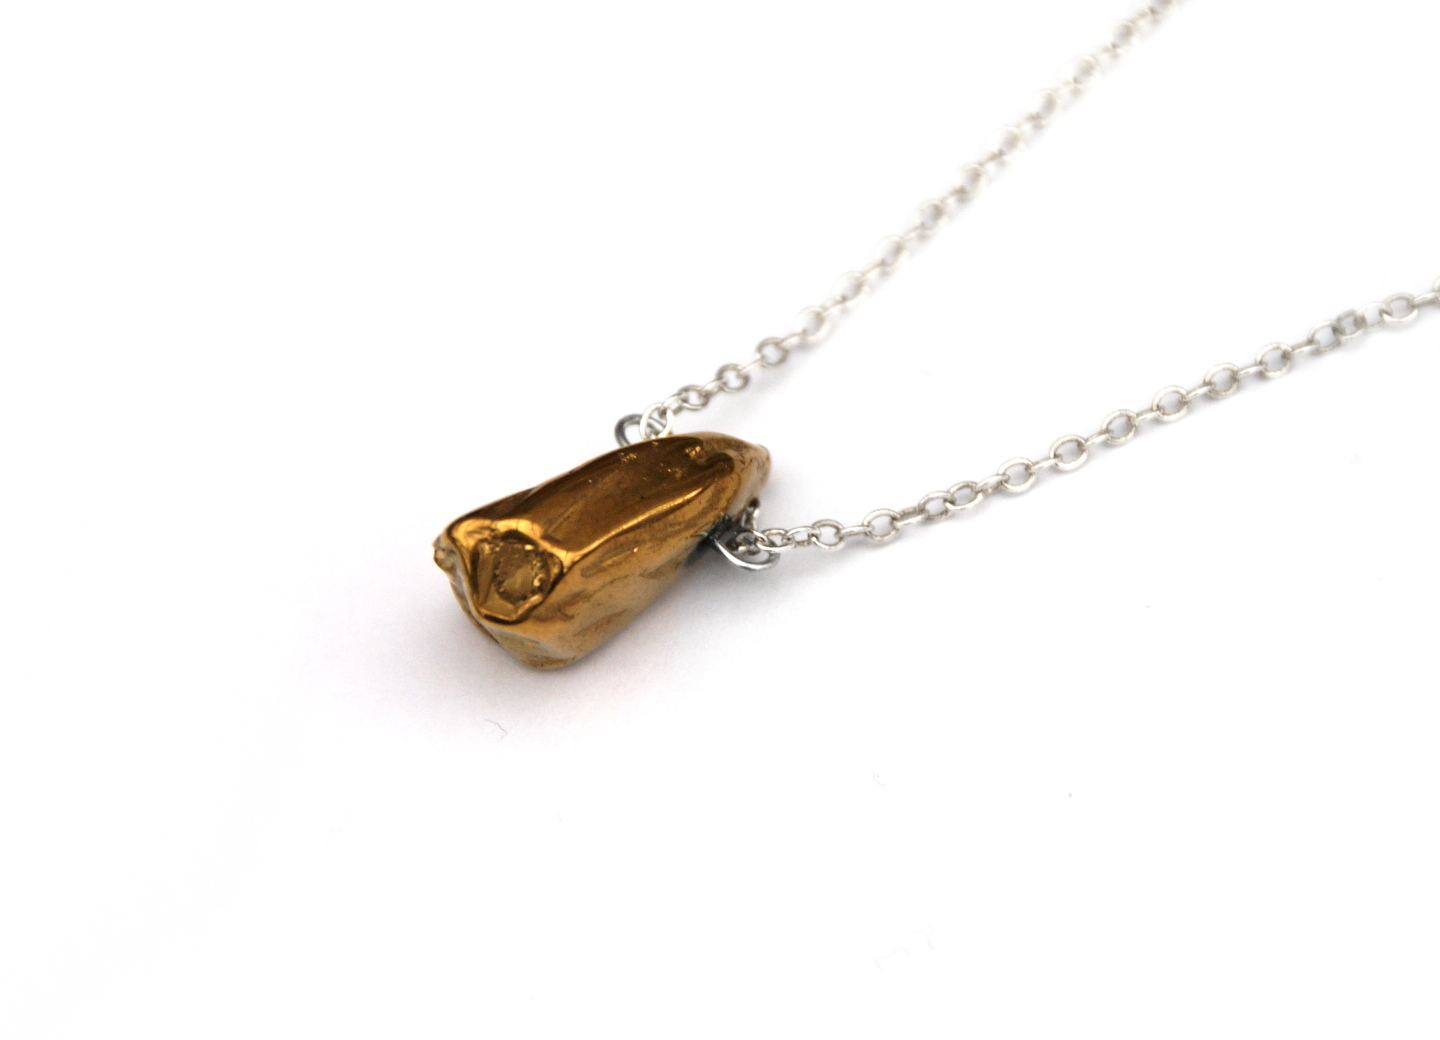 https://www.etsy.com/uk/listing/208226258/gold-titanium-druzy-necklace-gold-toned